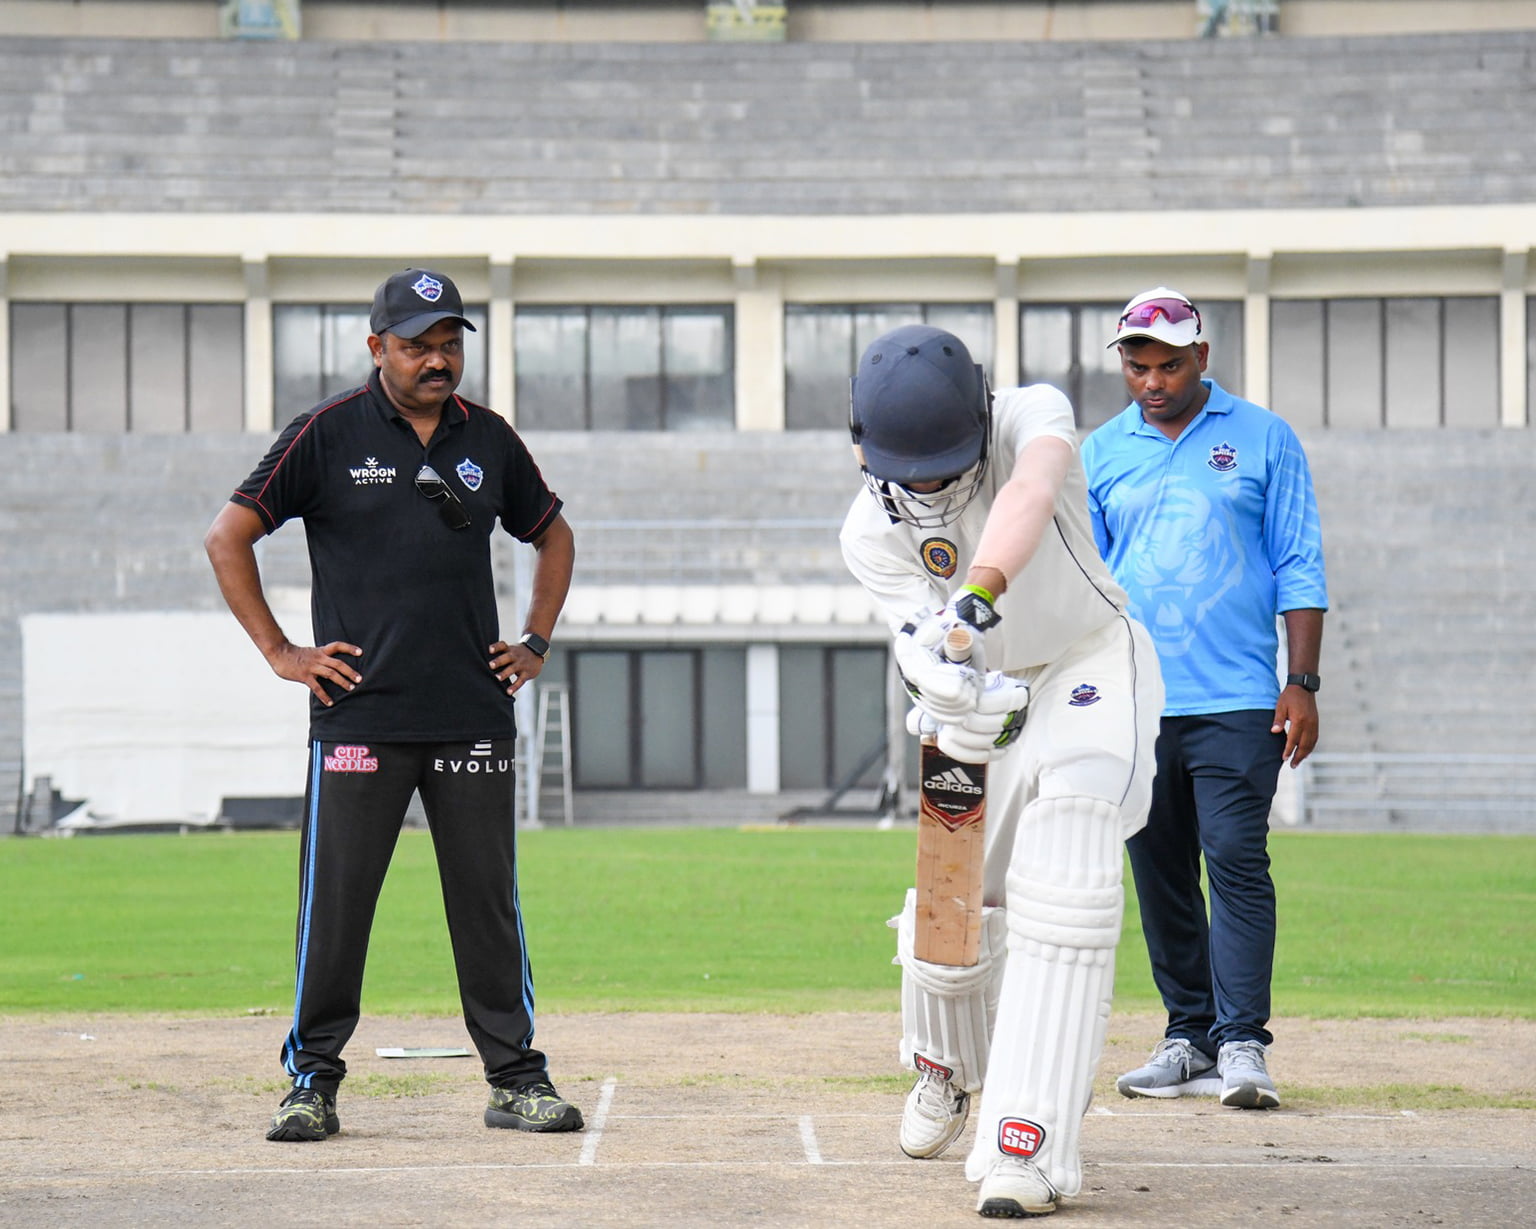 Dedicated Coaches Guiding Young Cricketers At Delhi Capitals Cricket Academy